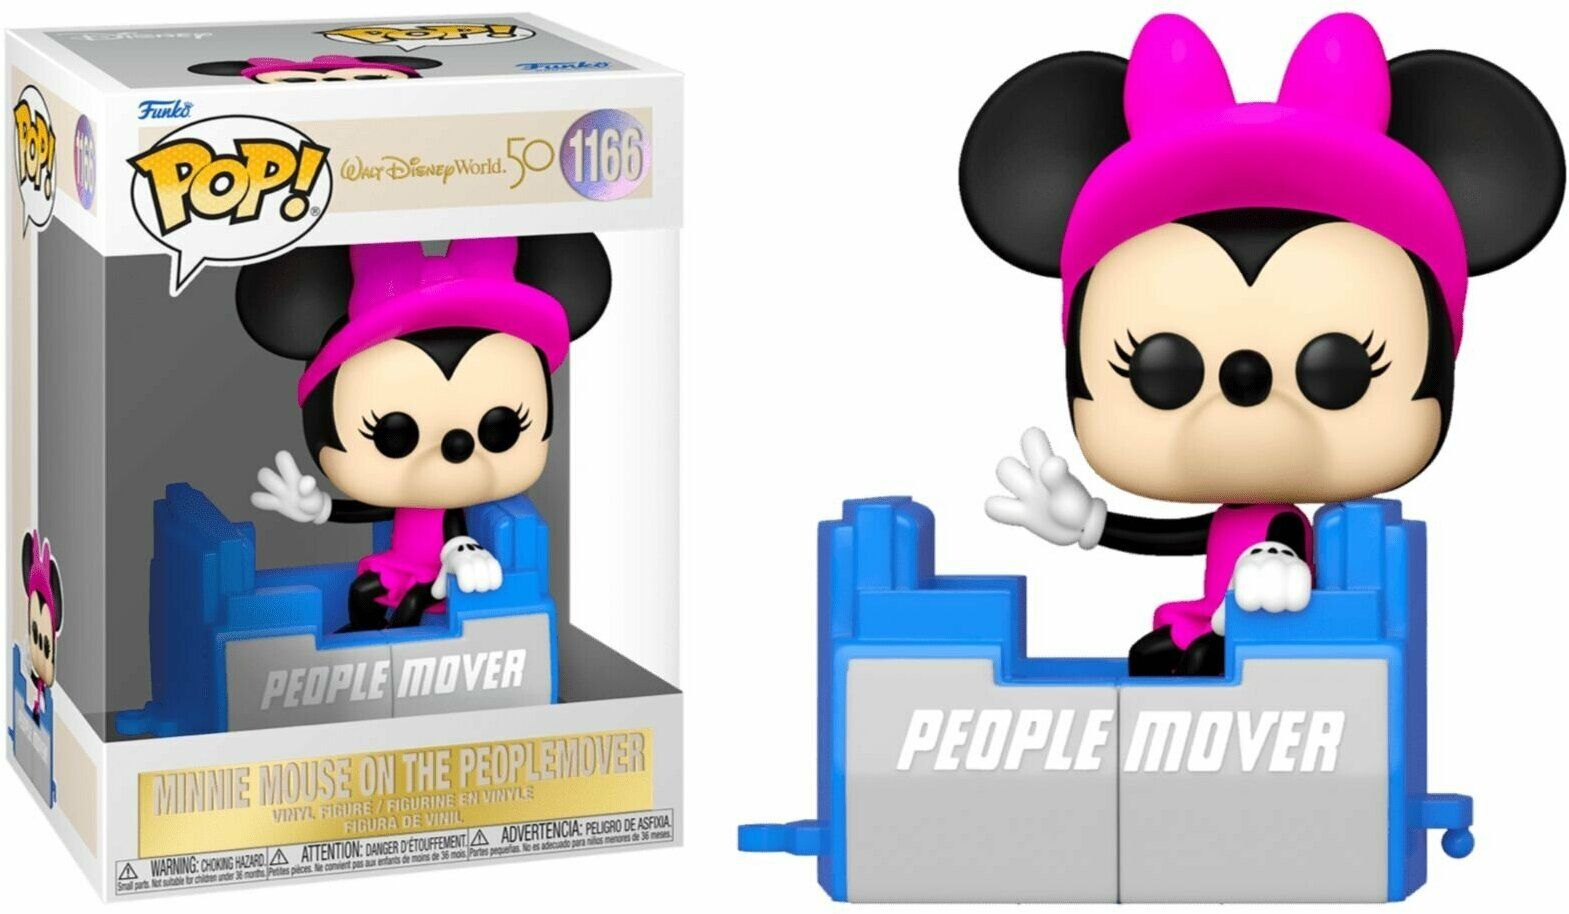 фигурка funko walt disney world 50th anniversary pop minnie mouse on the peoplemover Фигурка Funko POP! Walt Disney World 50th Anniversary: People Mover Minnie